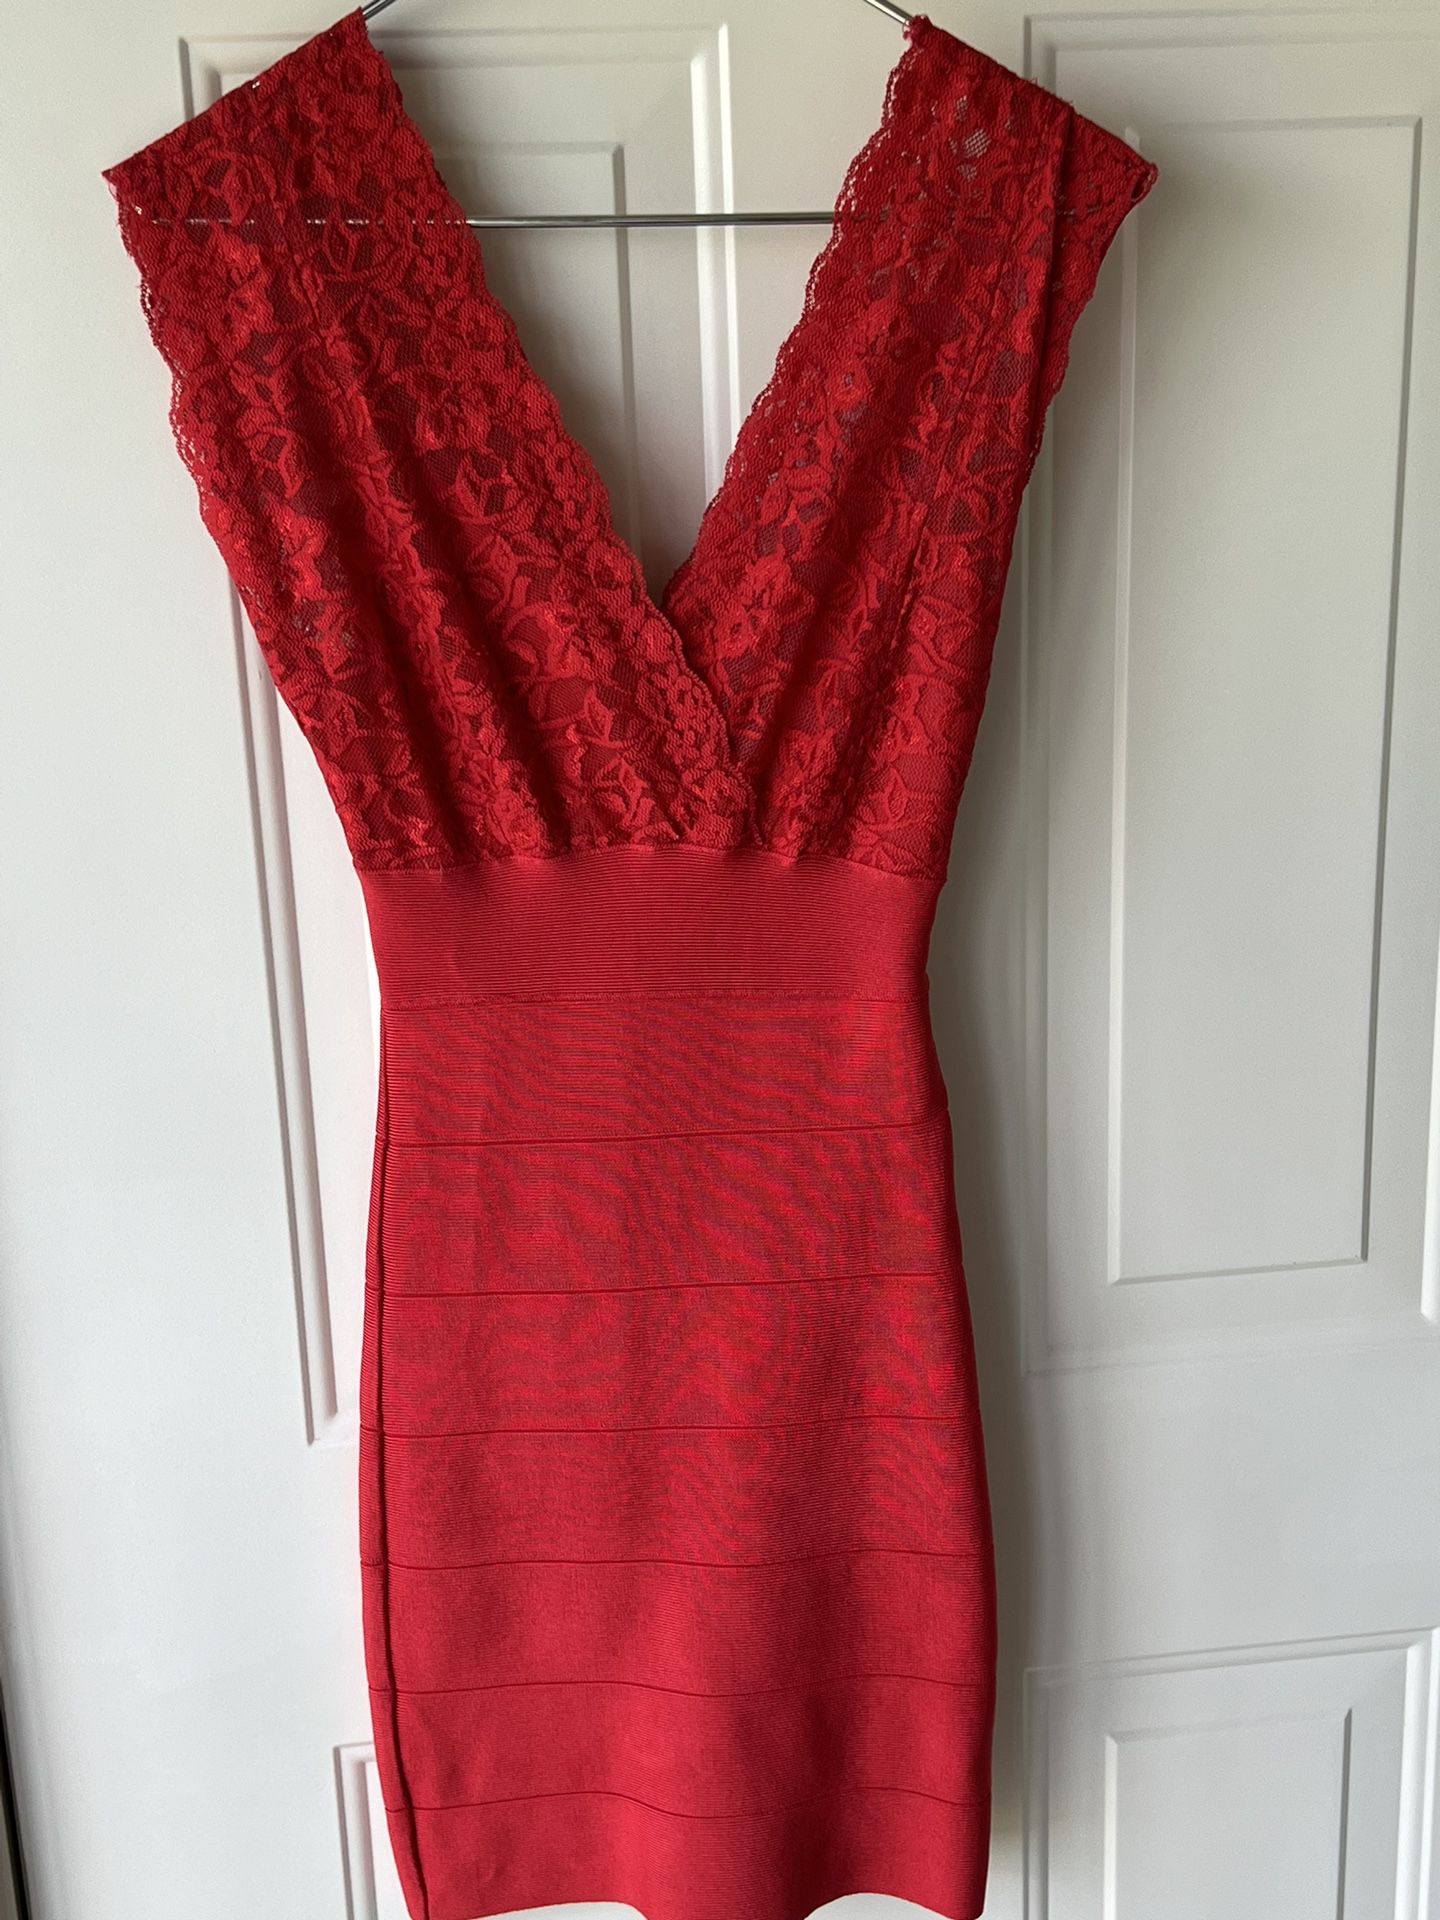 Bebe red mini dress size s